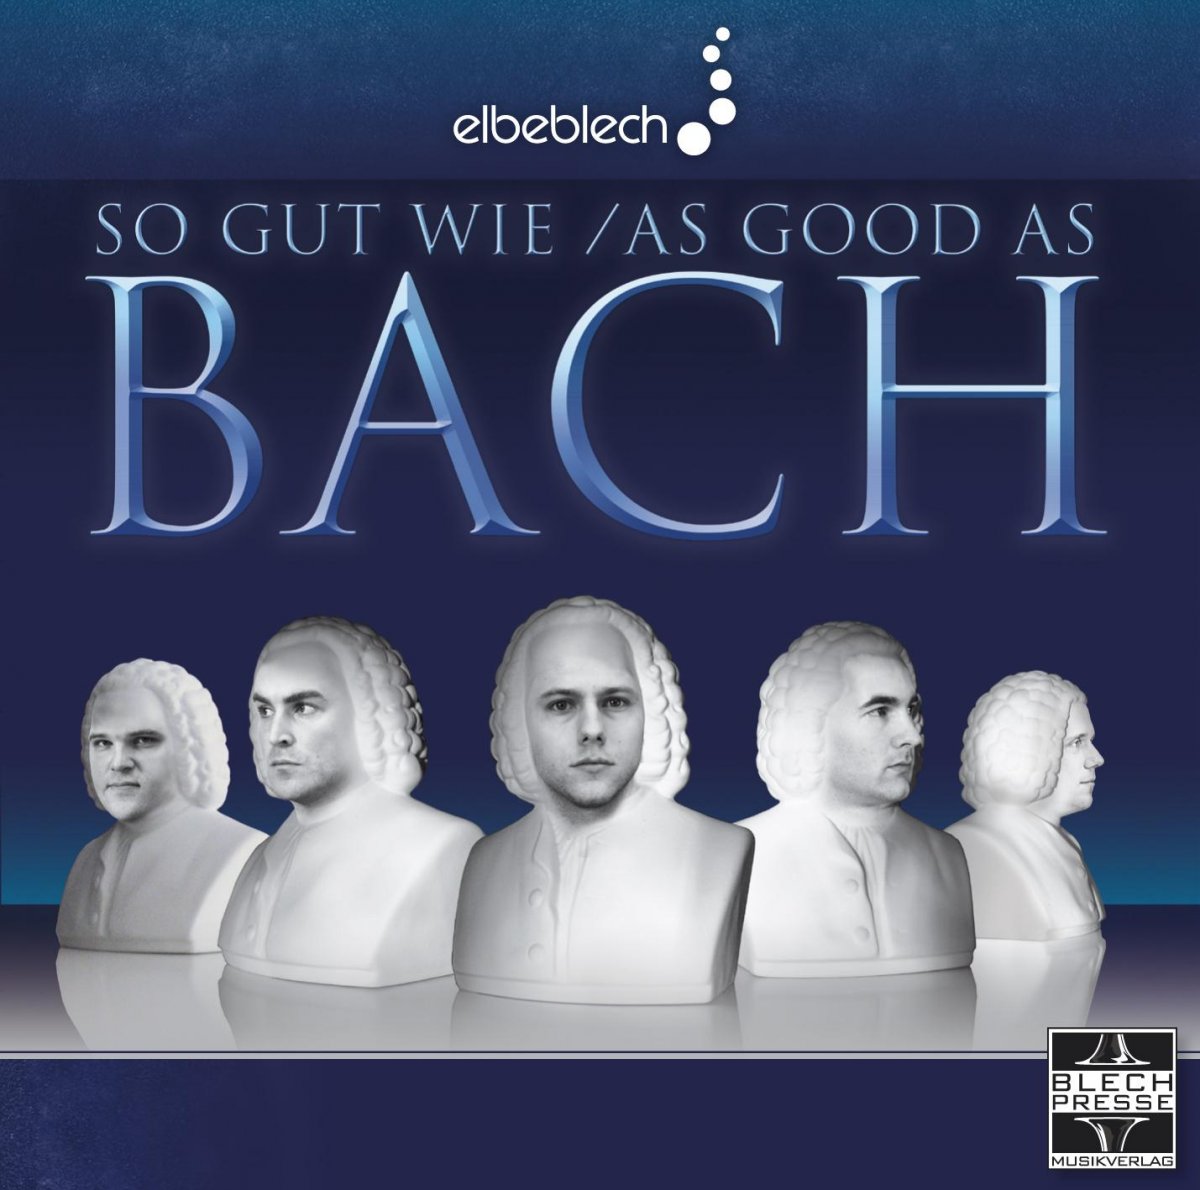 So gut wie Bach / As good as Bach - cliquer ici